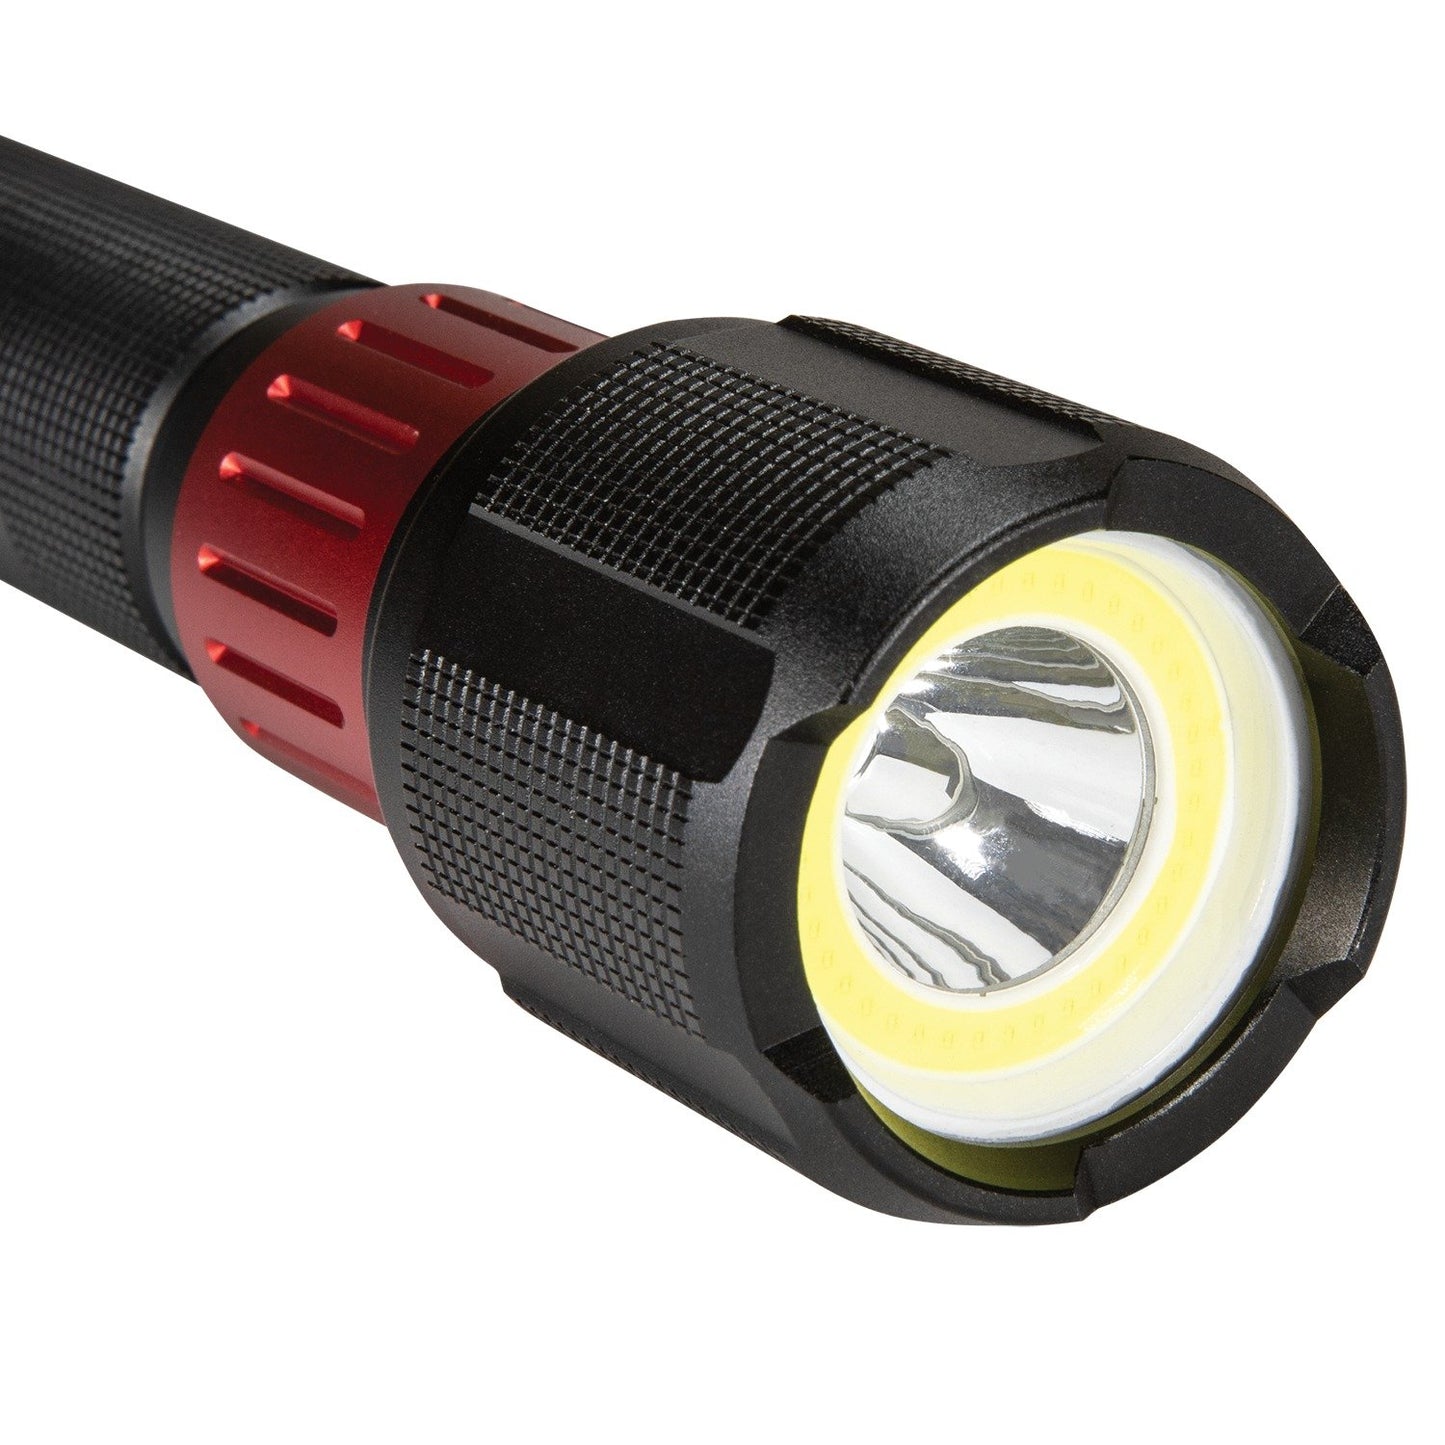 Dorcy 41-4328 2,000-Lumen USB Rechargeable Flashlight with Powerbank